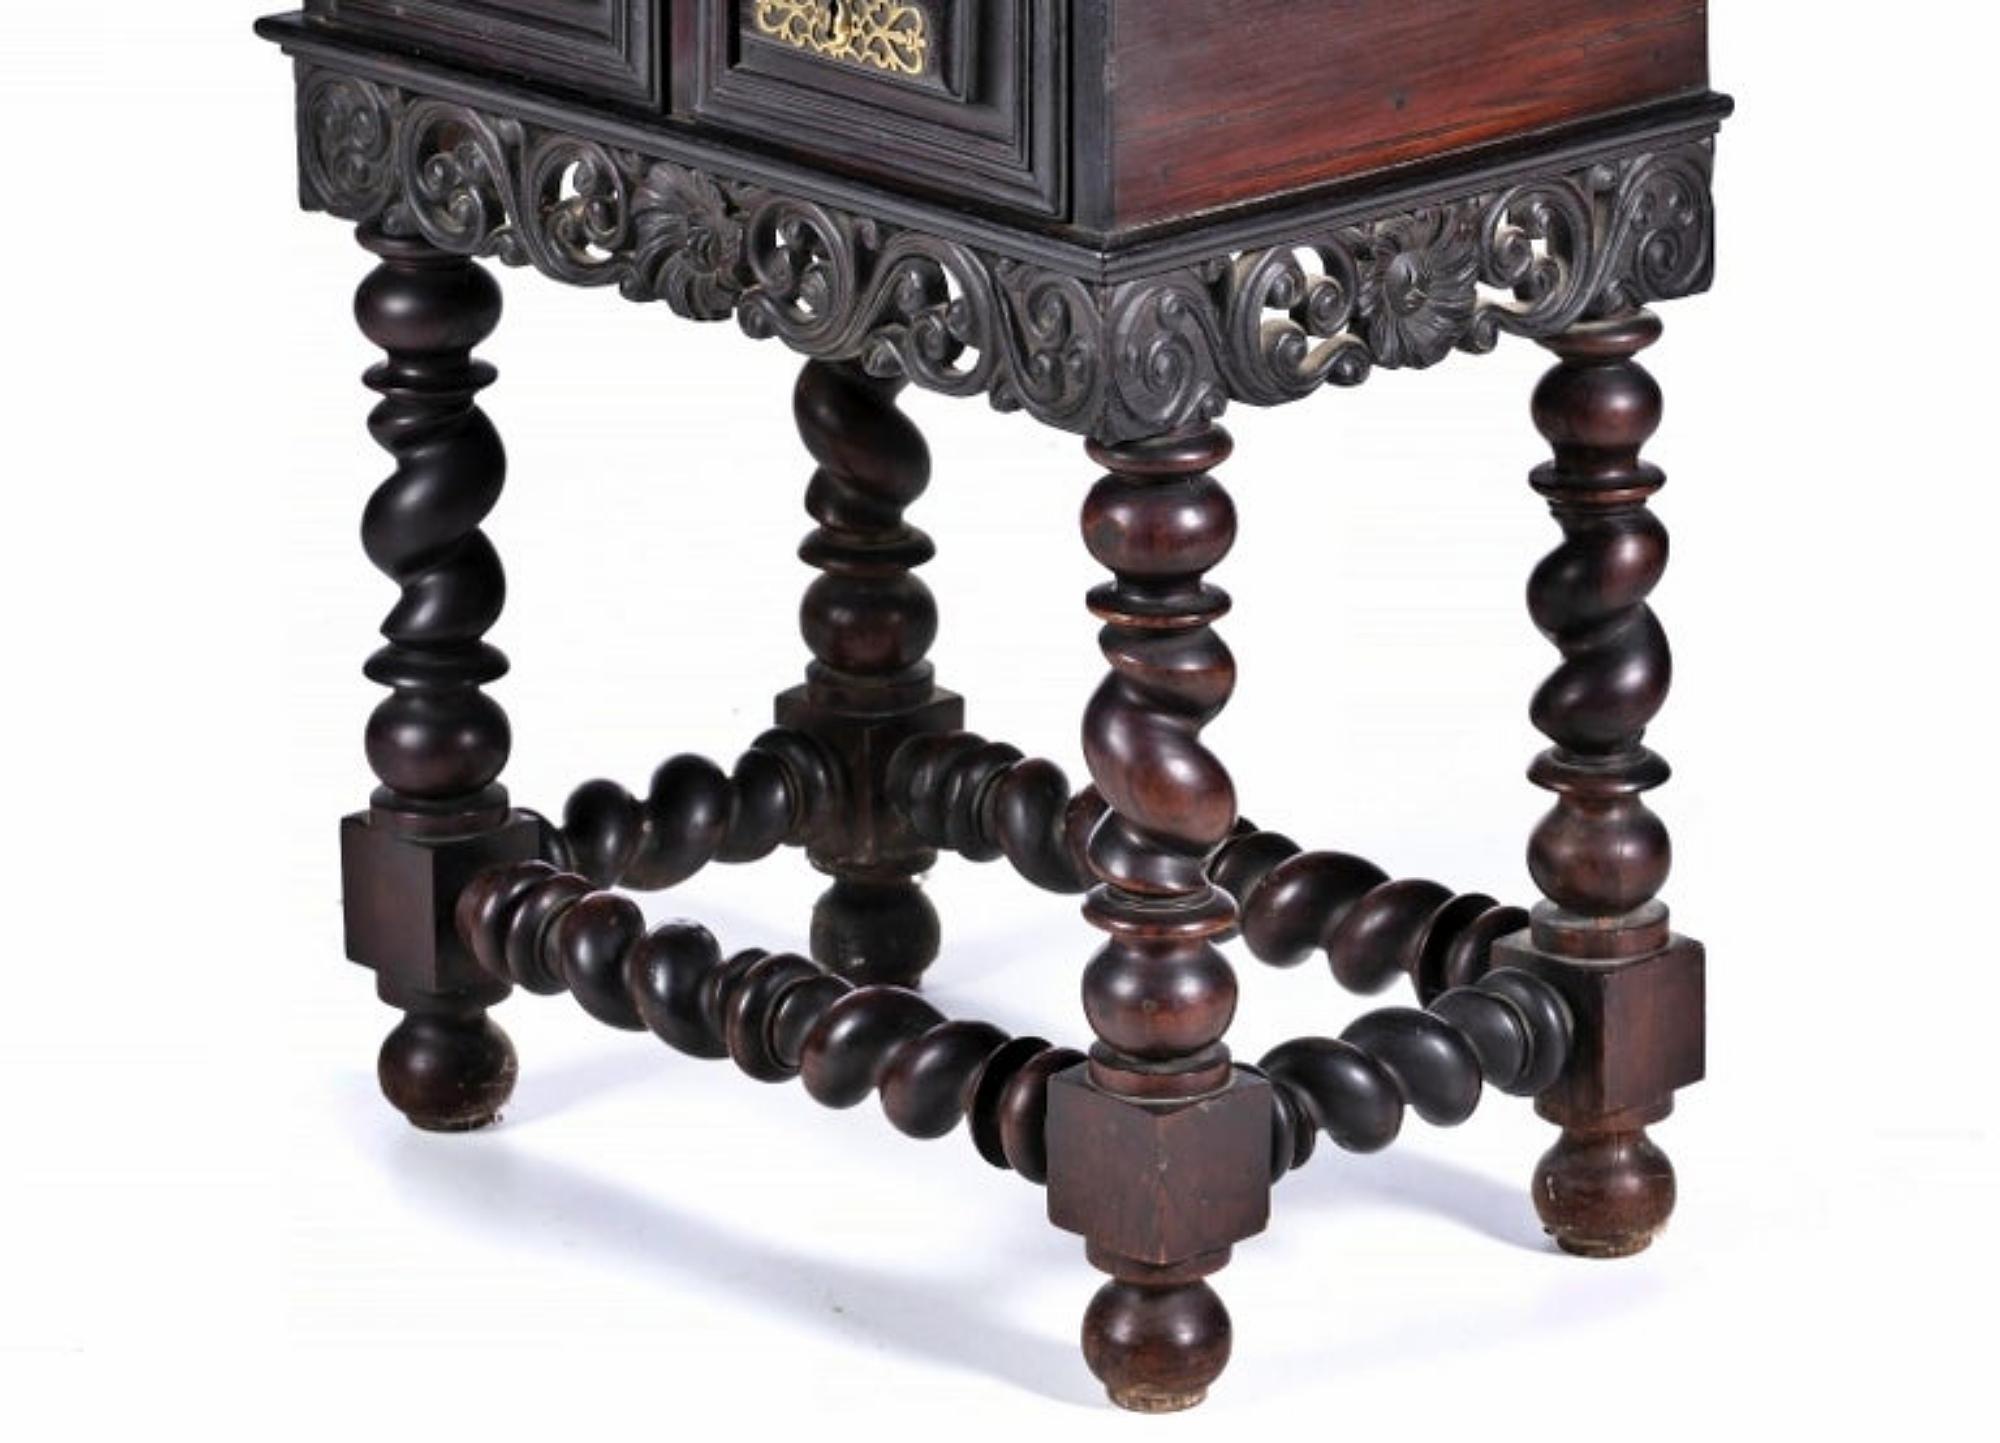 Baroque Rare cabinet portugais du 18e siècle en vente